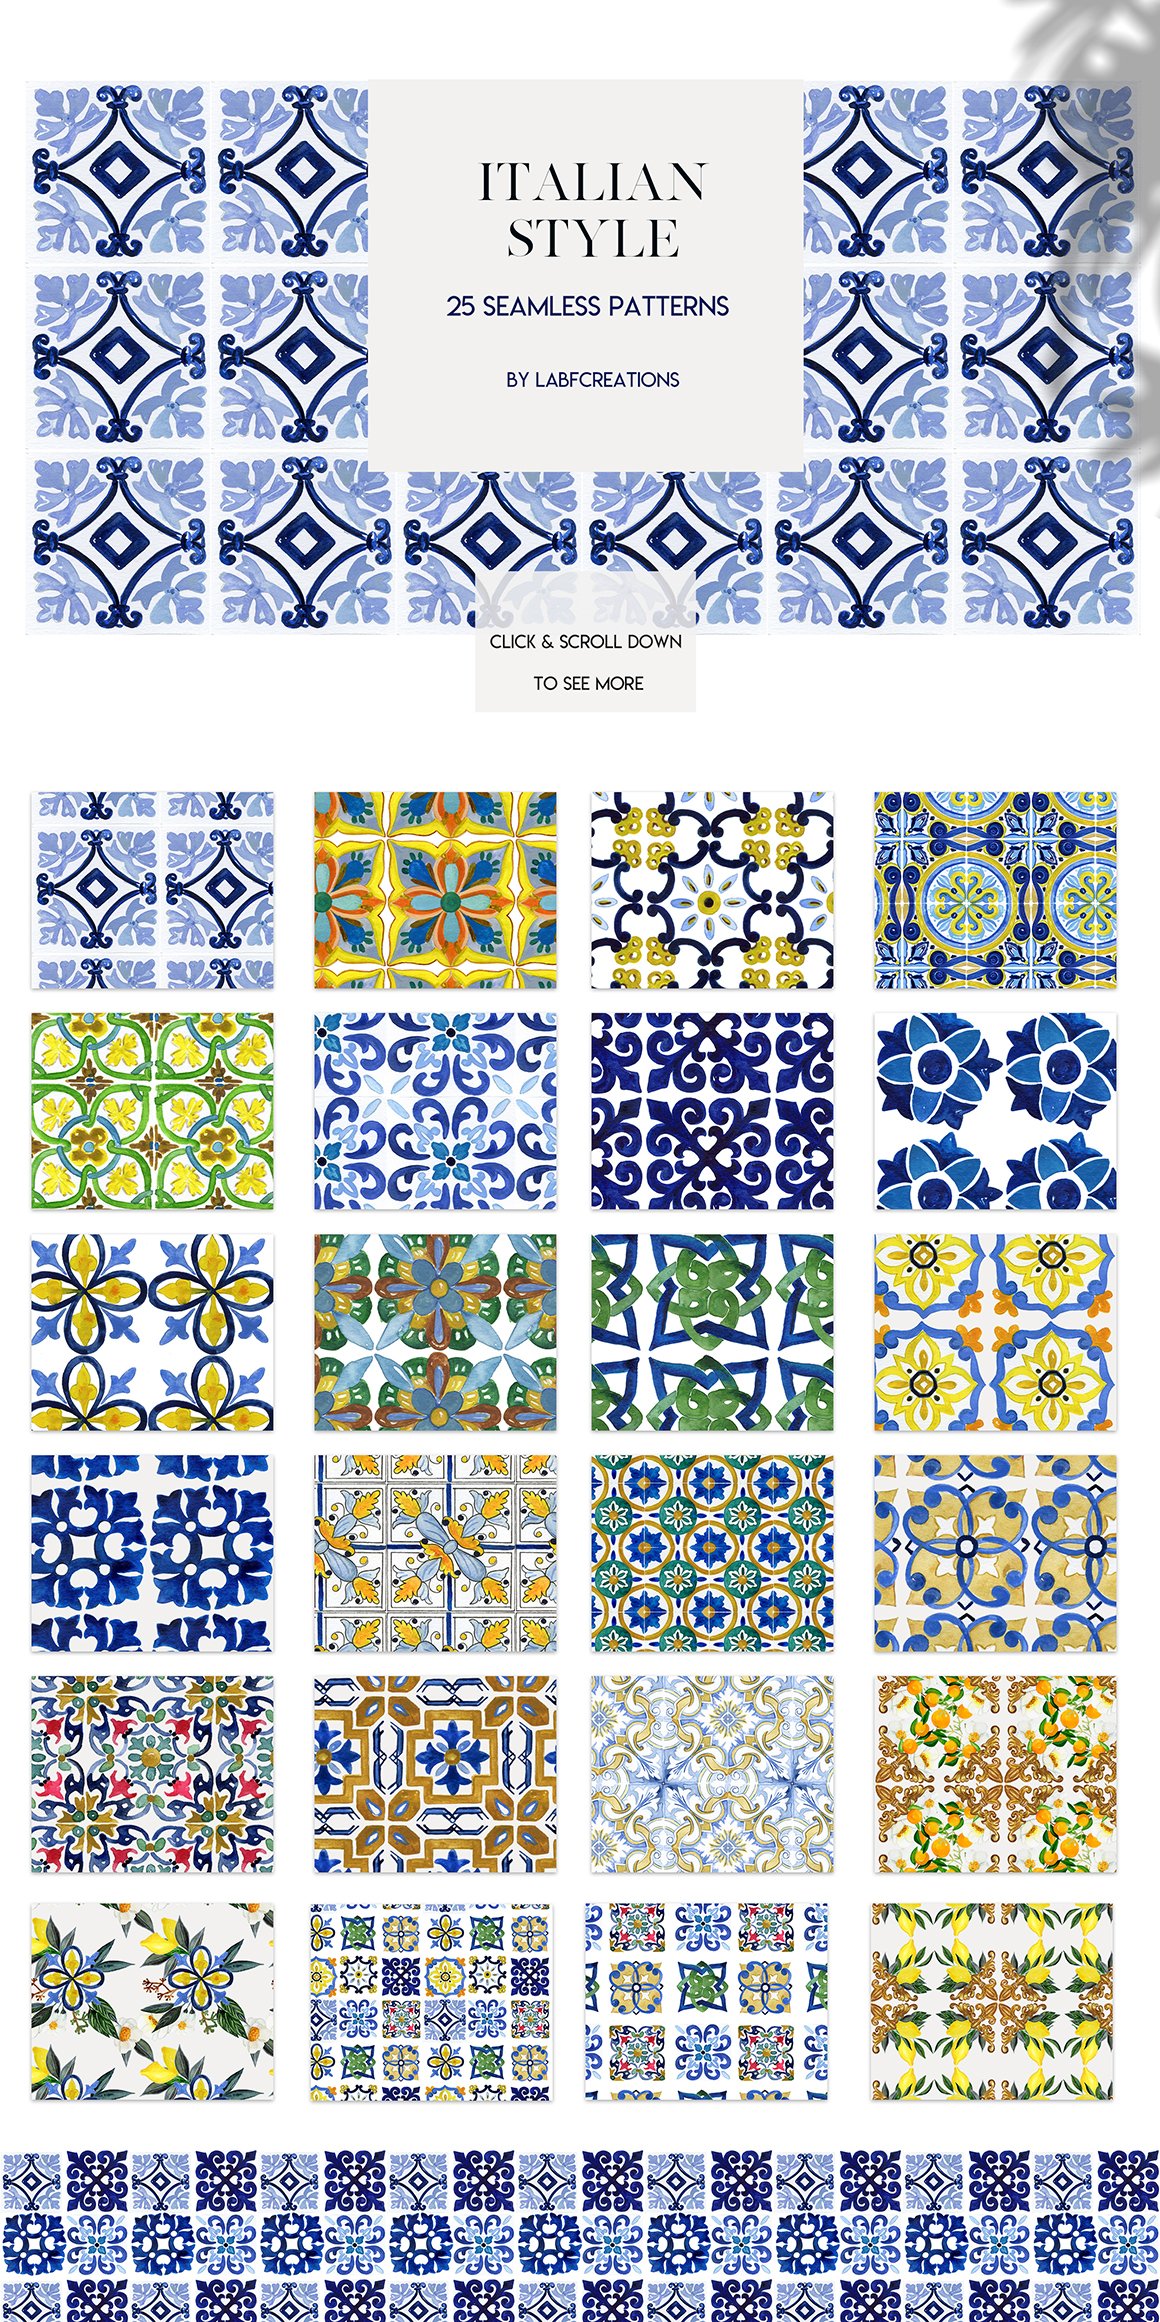 Italian Style Watercolor Tiles